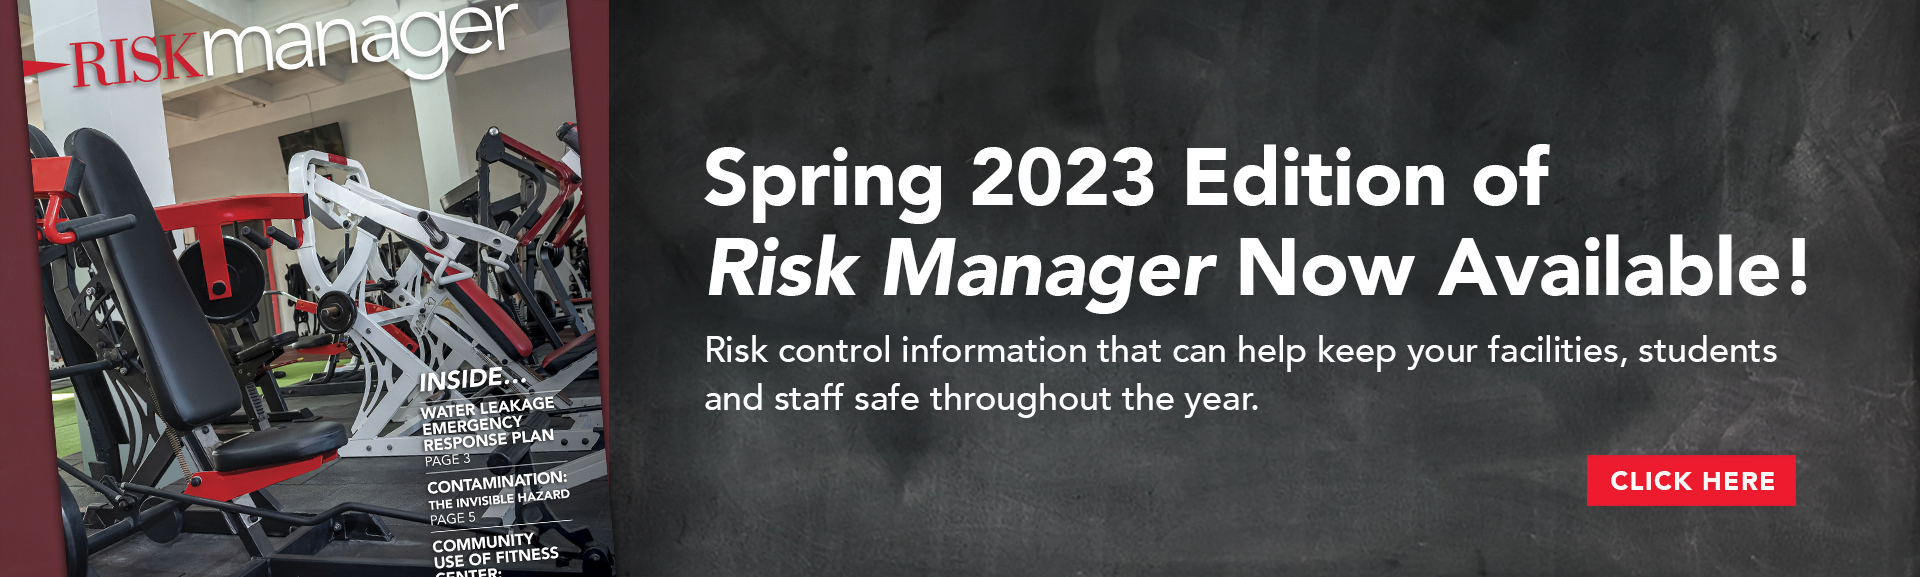 Risk Manager Newsletter Spring 23